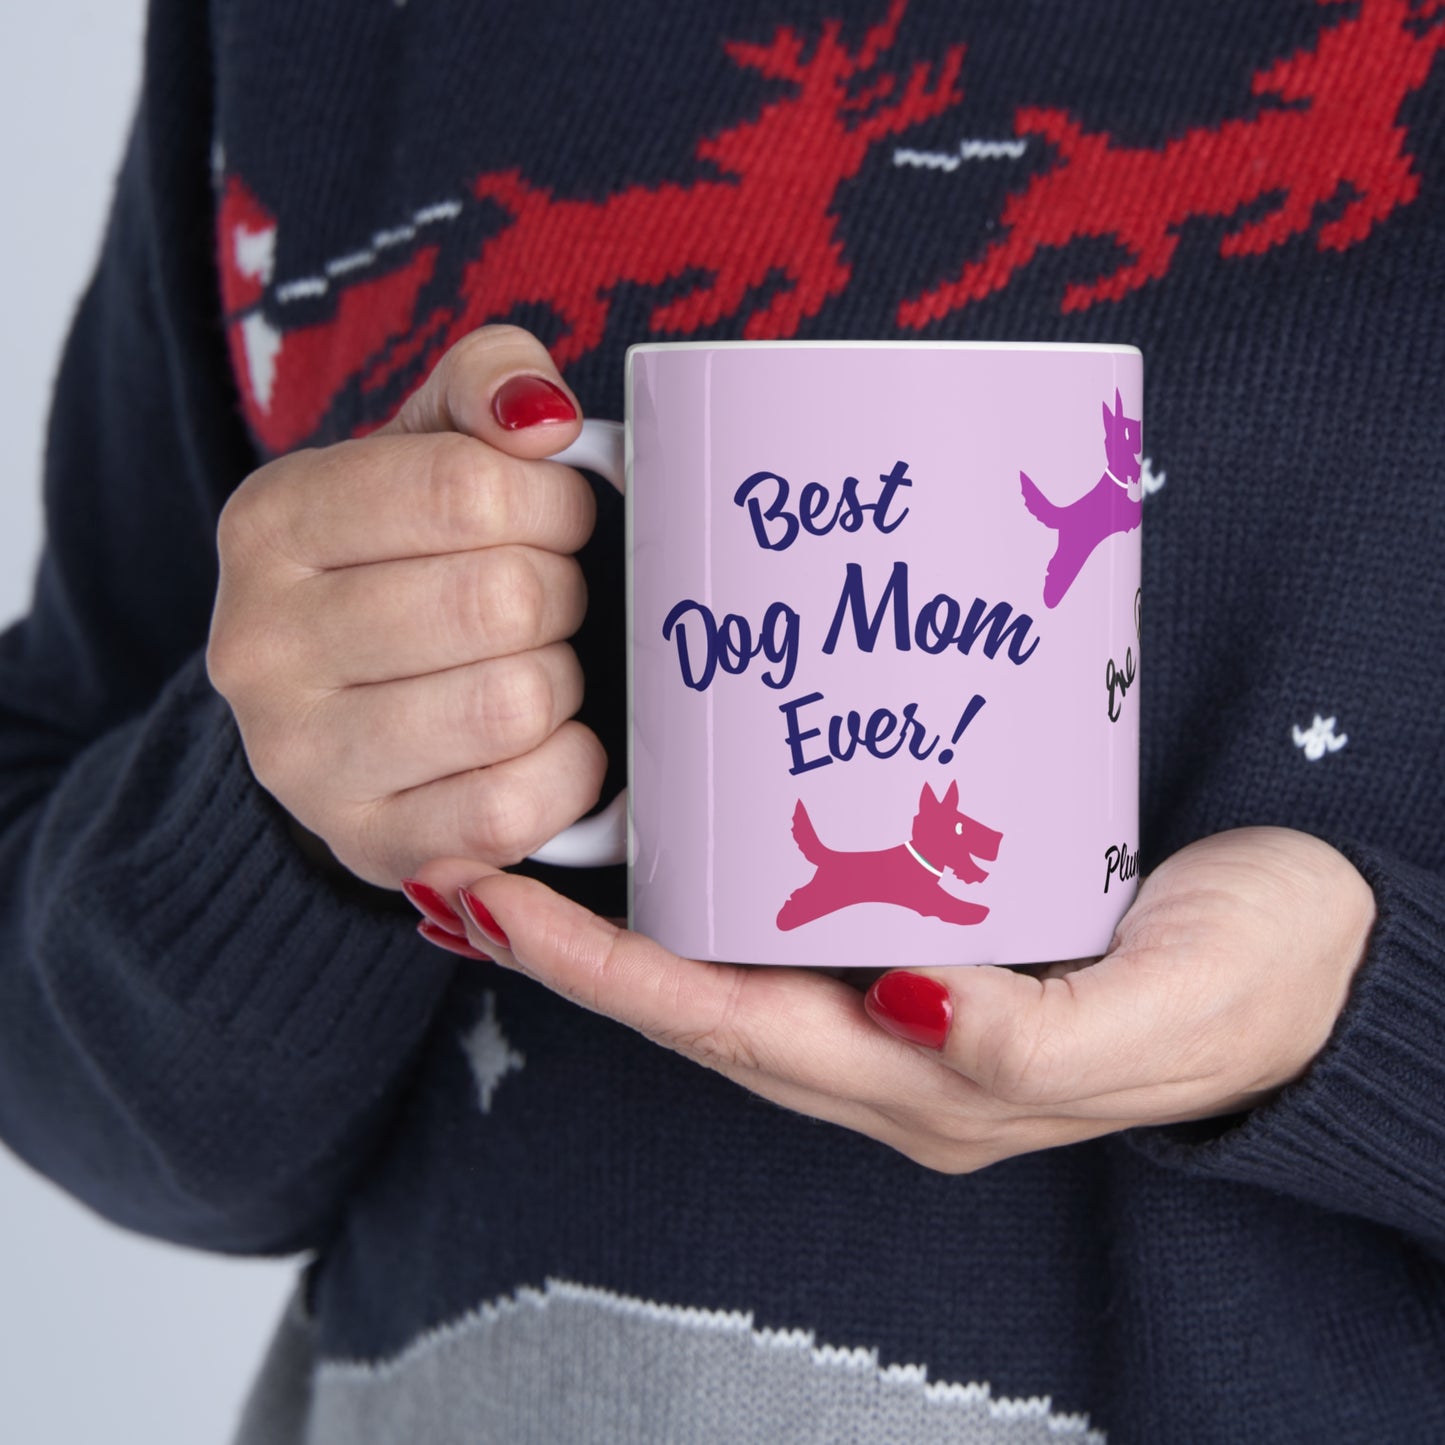 PlumbGoods Best Dog Mom Mug in Pink